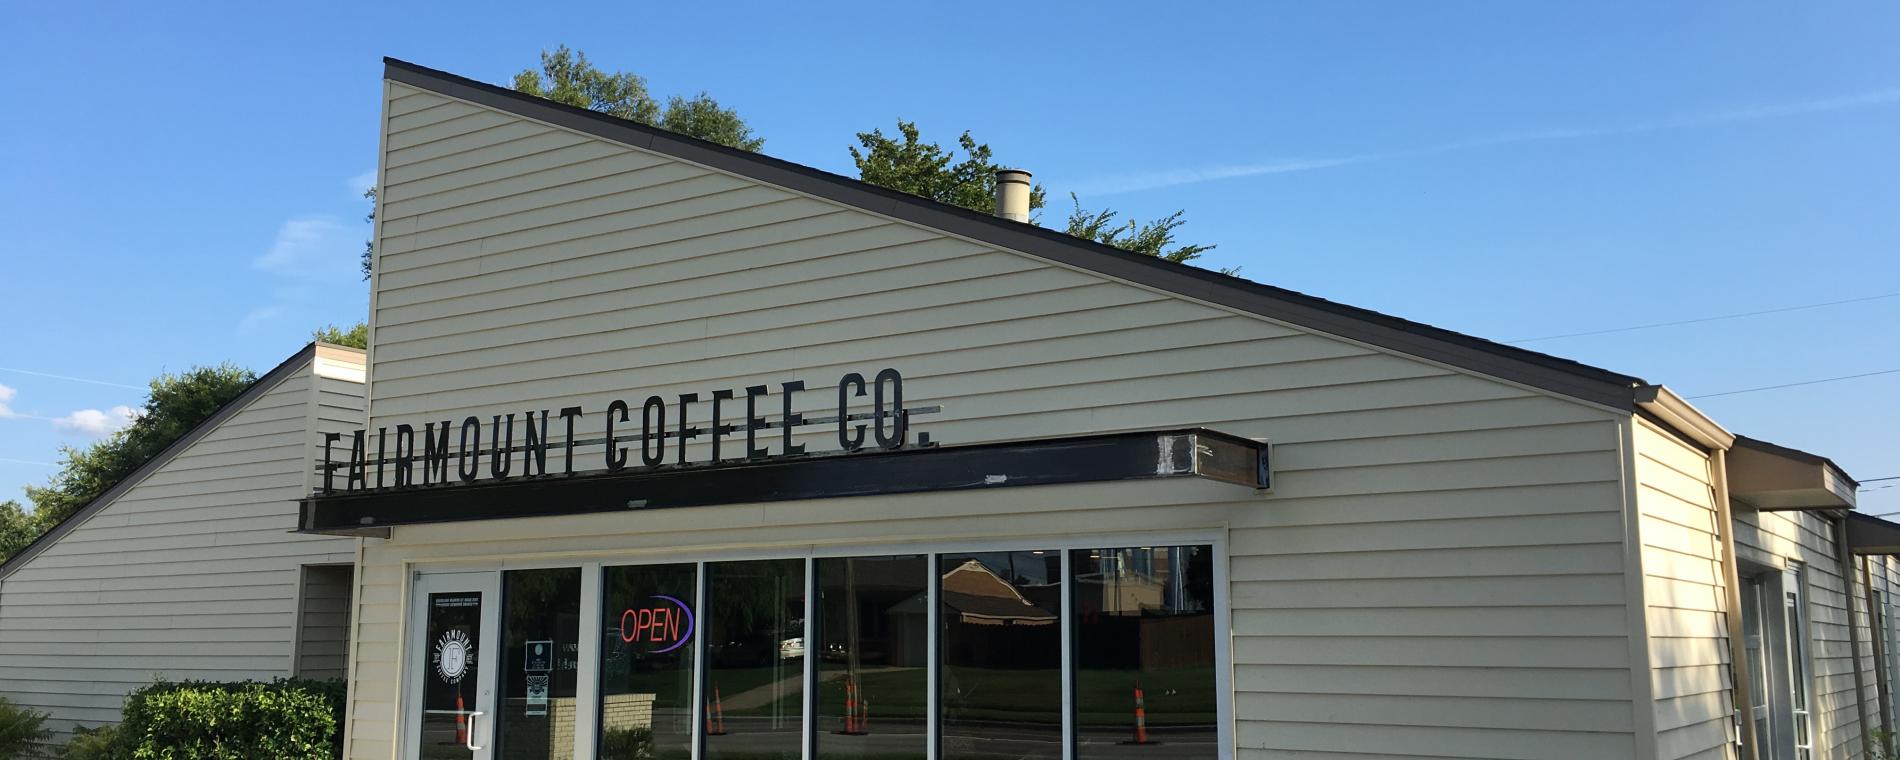 Fairmount Coffee exterior Visit Wichita